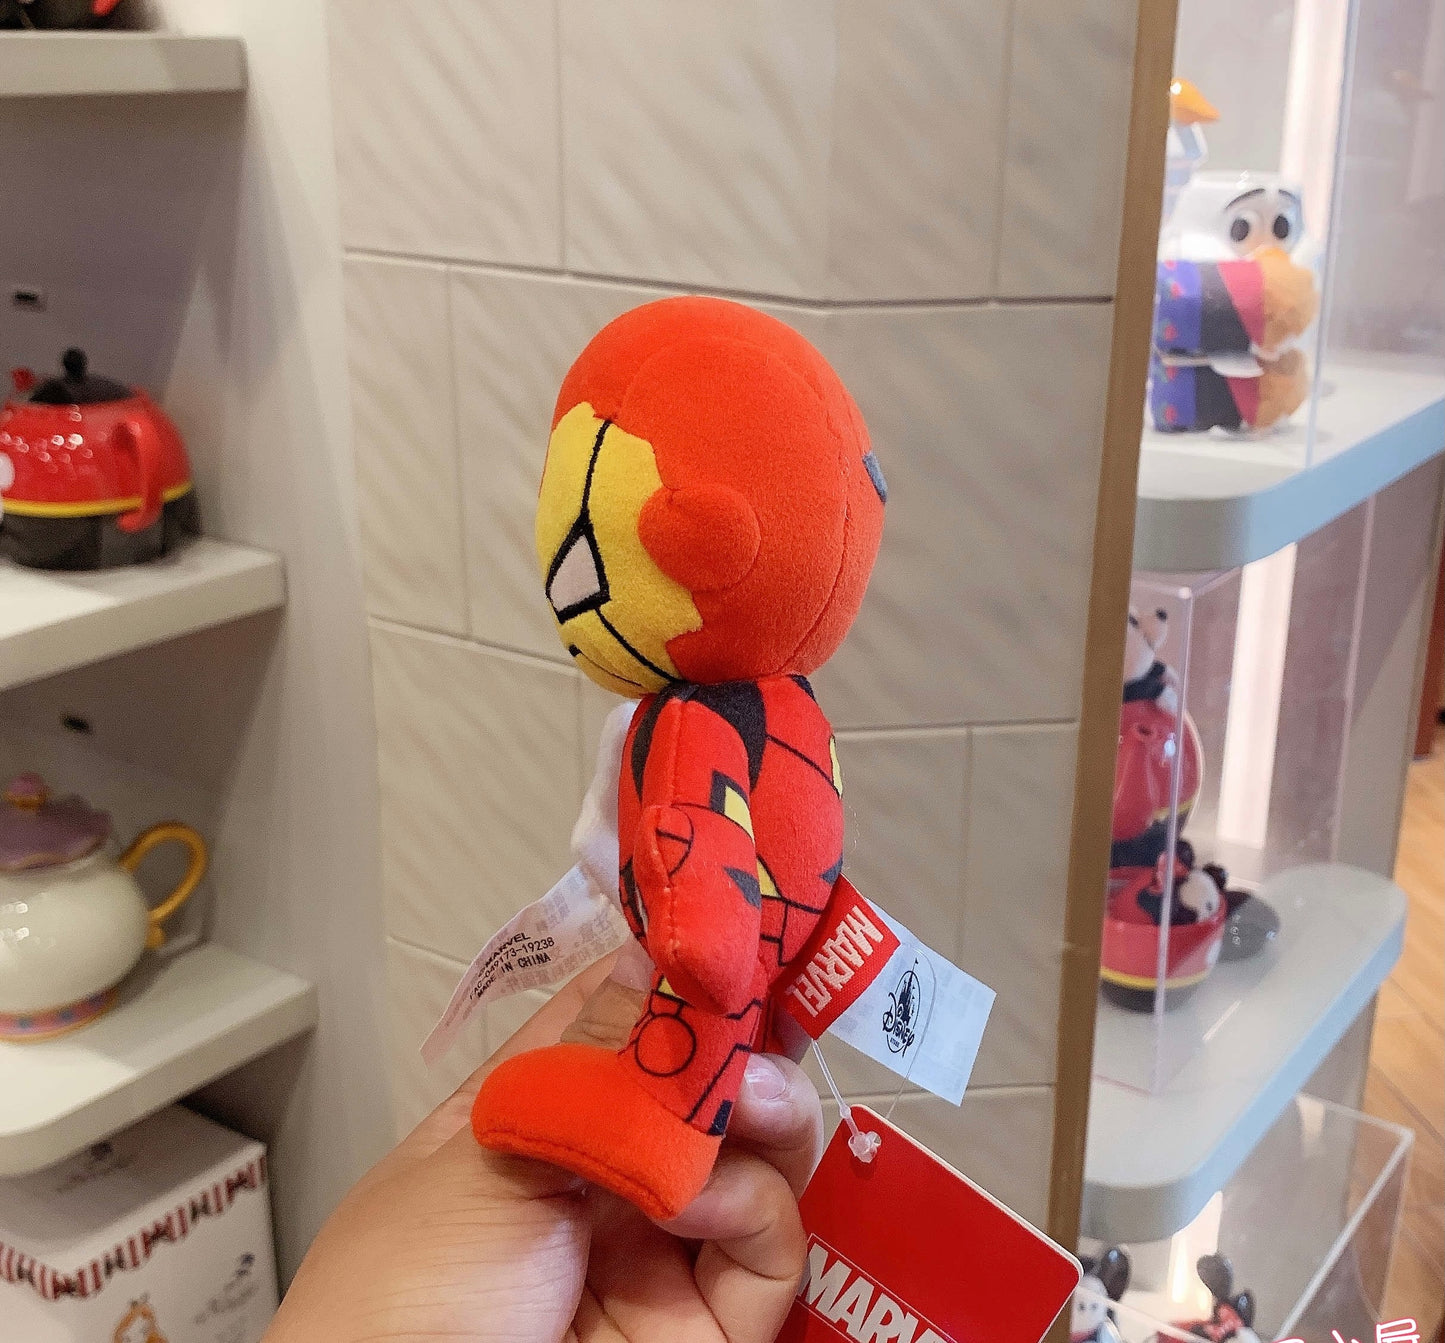 Authentic nuiMOs Plush Toy Marvel Ironman Figure Shanghai Disney Store Doll